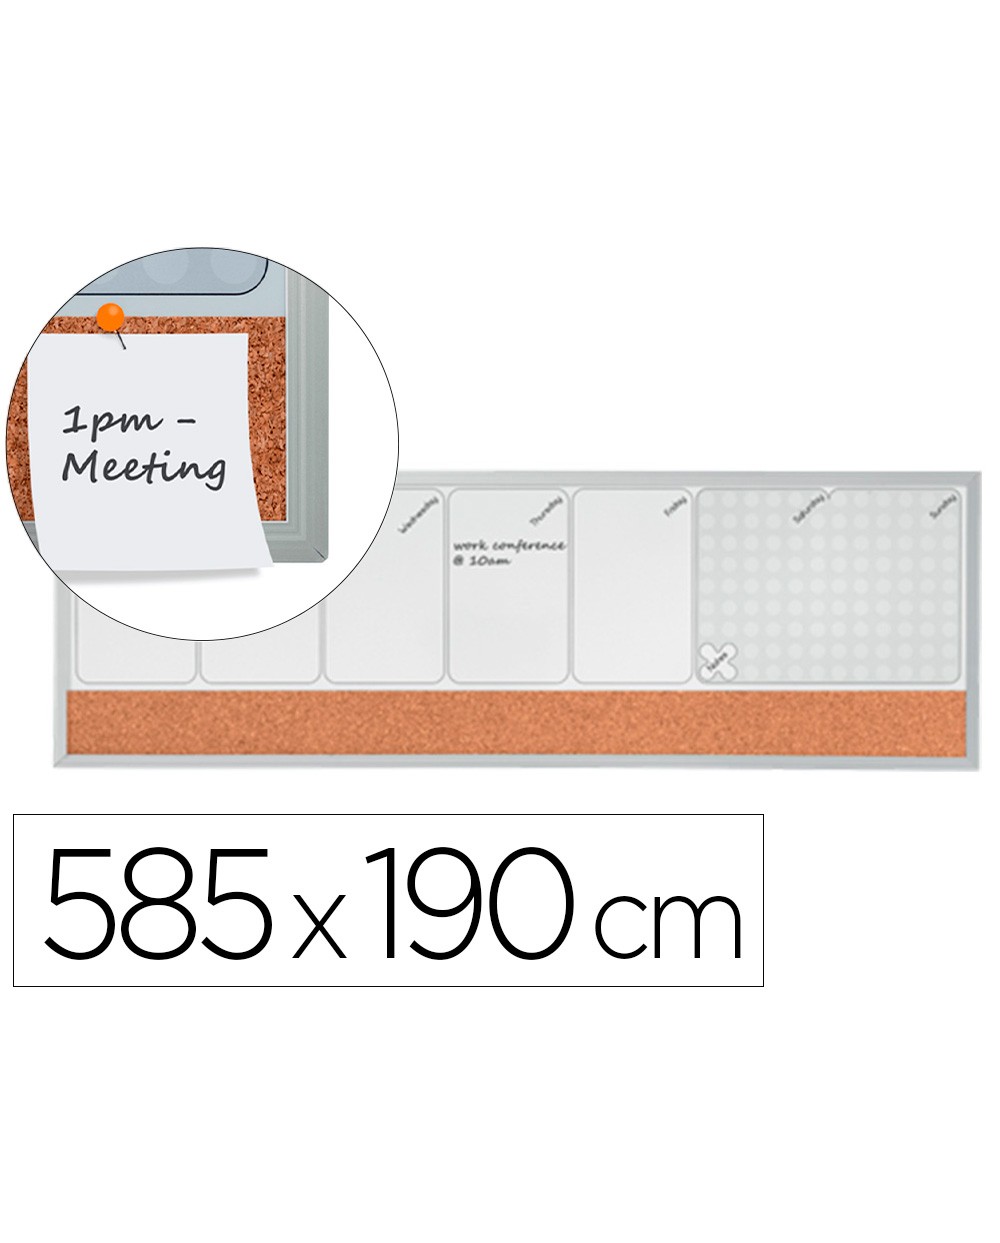 Planificador semanal nobo magnetico tablero corcho horizontal con marco de aluminio 585x190 mm